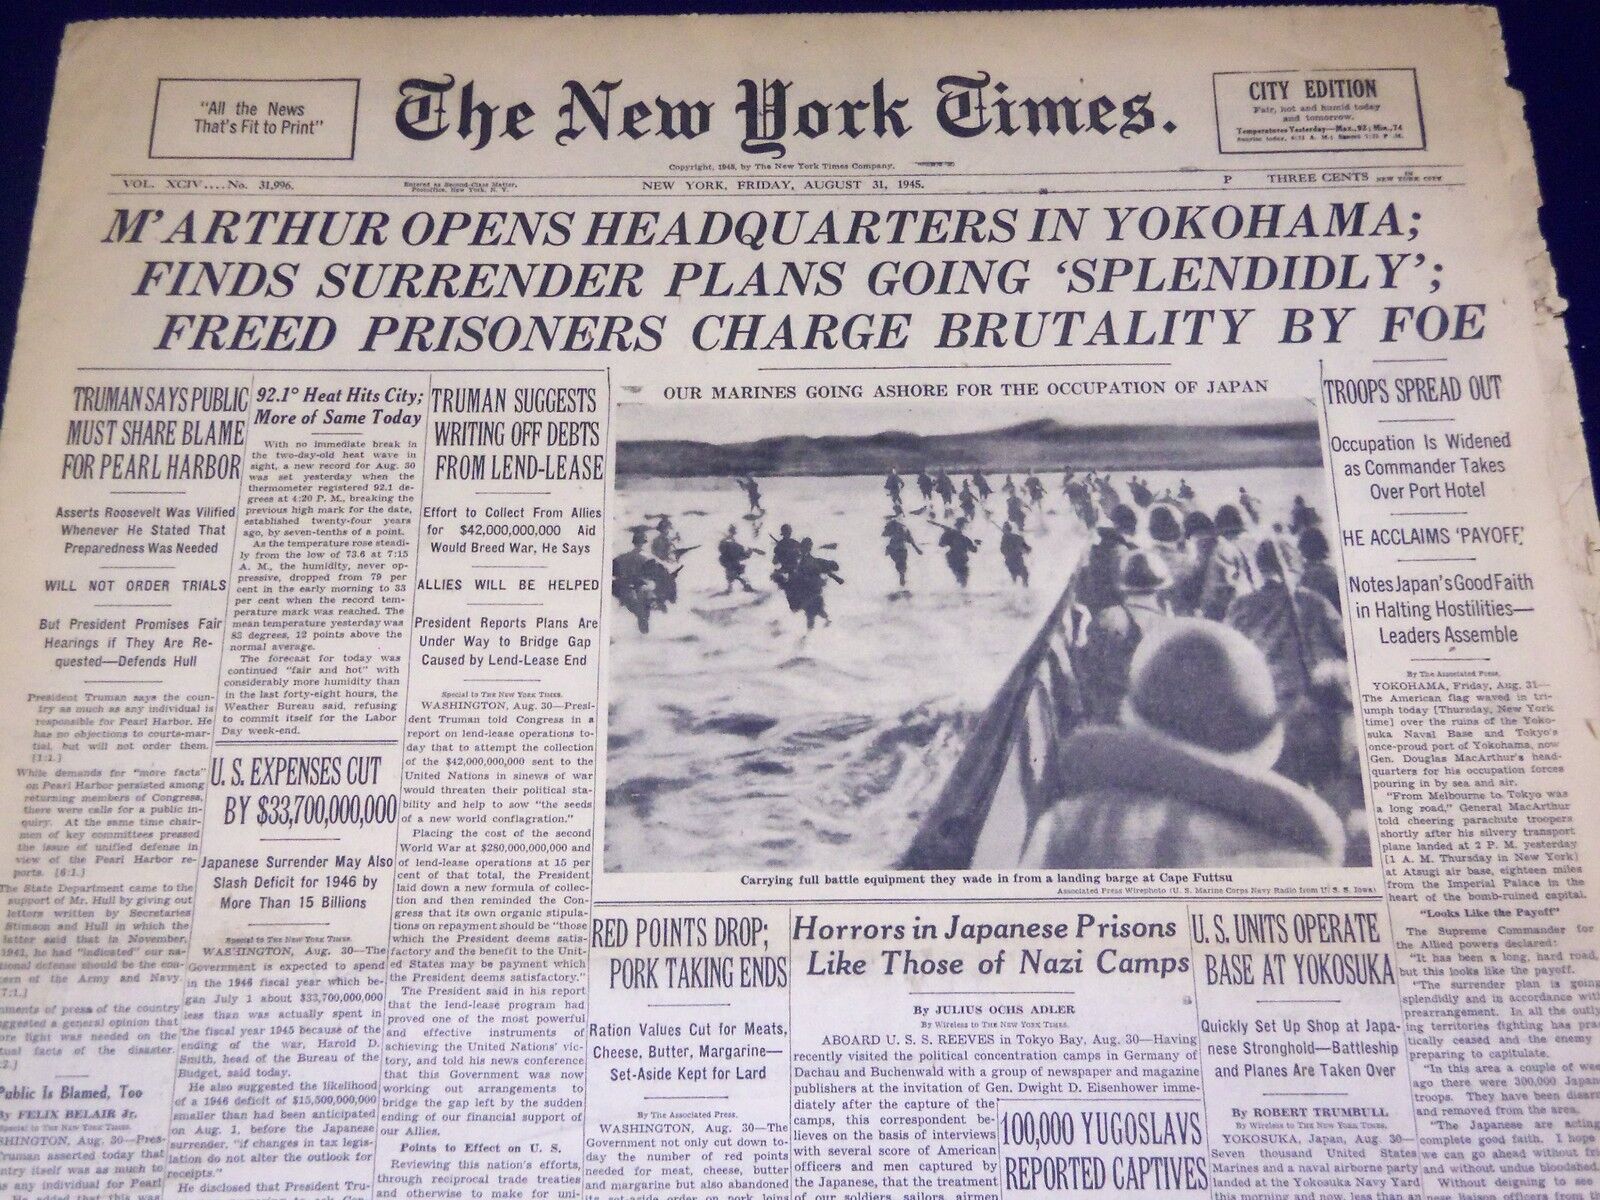 1945 AUG 31 NEW YORK TIMES - M\'ARTHUR OPENS HEADQUARTERS IN YOKAHAMA - NT 566